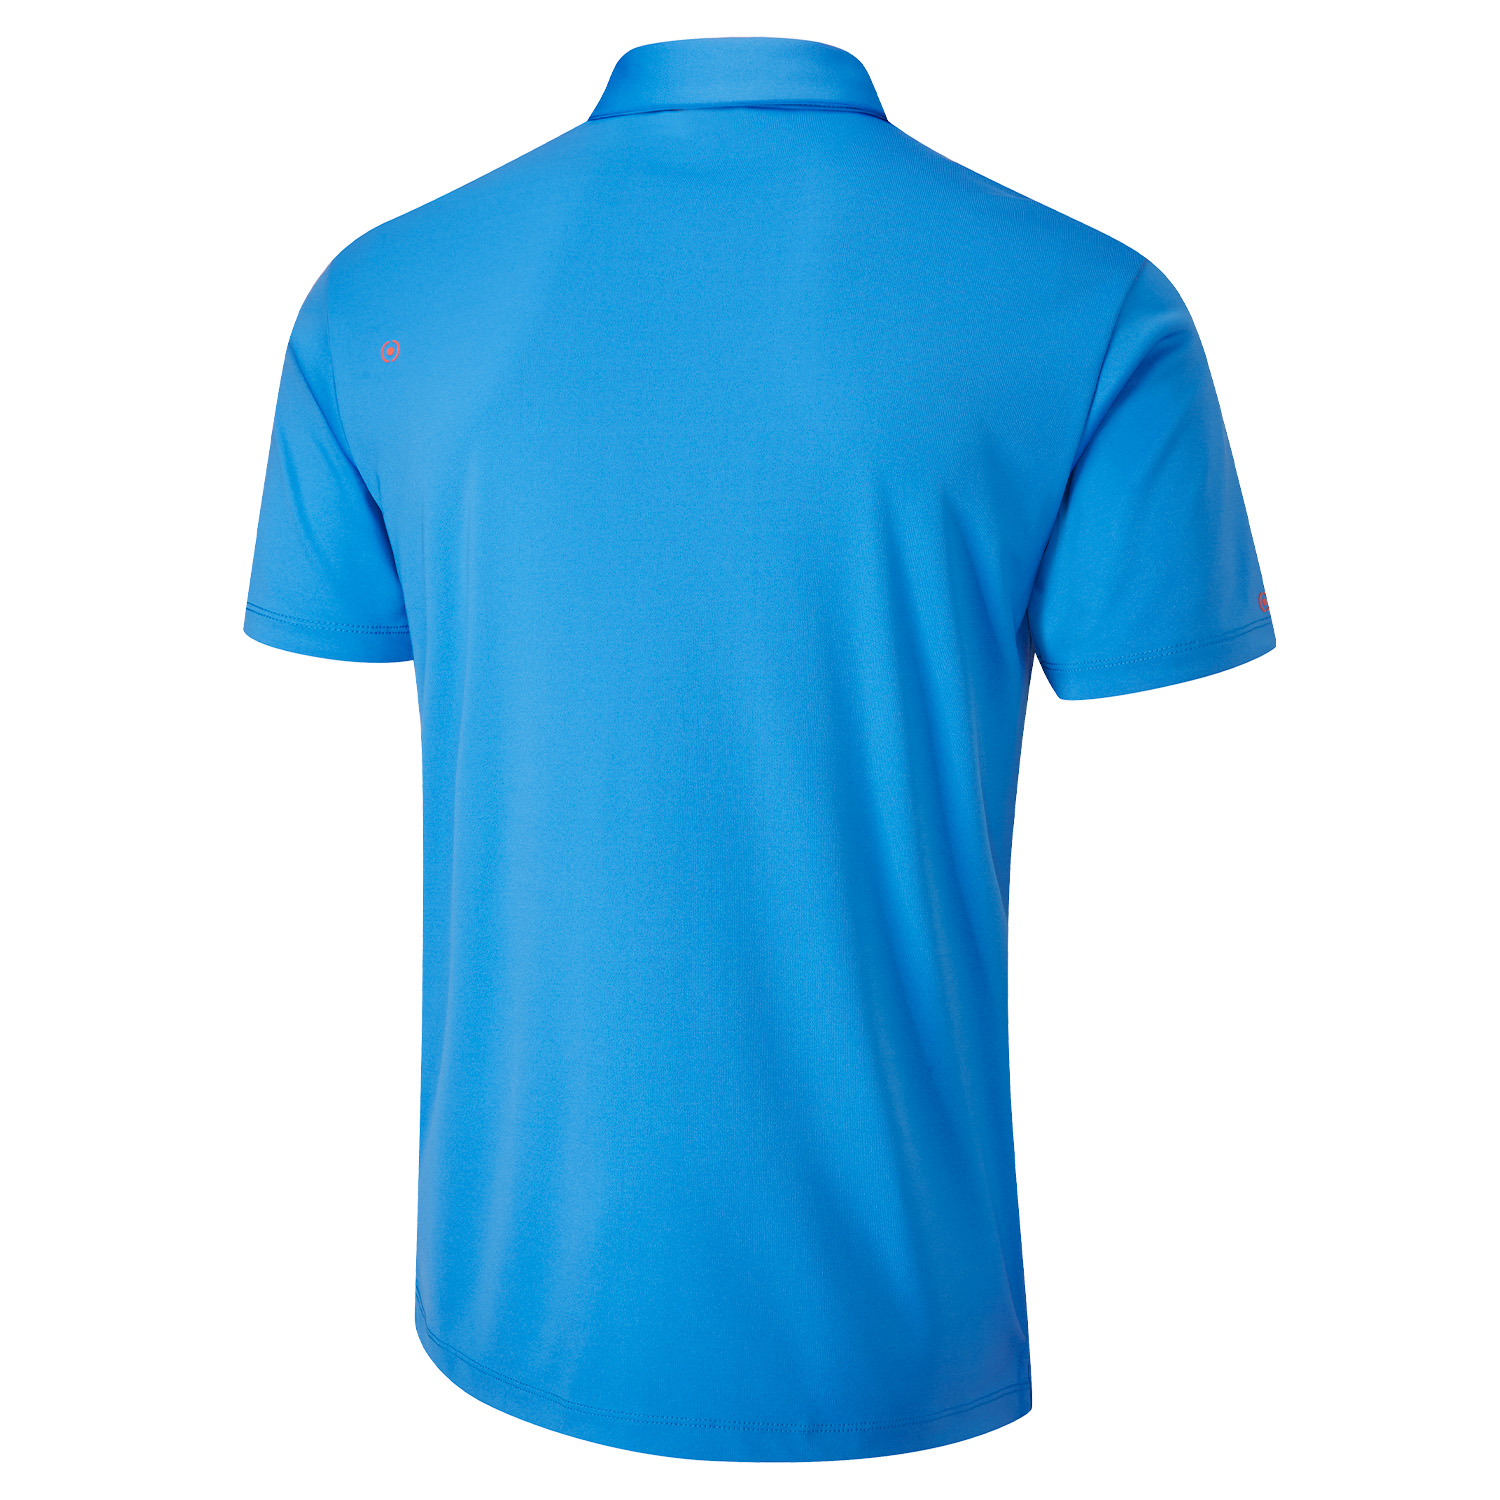 PING Portman Golf Polo Shirt French Blue/North Sea | Scottsdale Golf